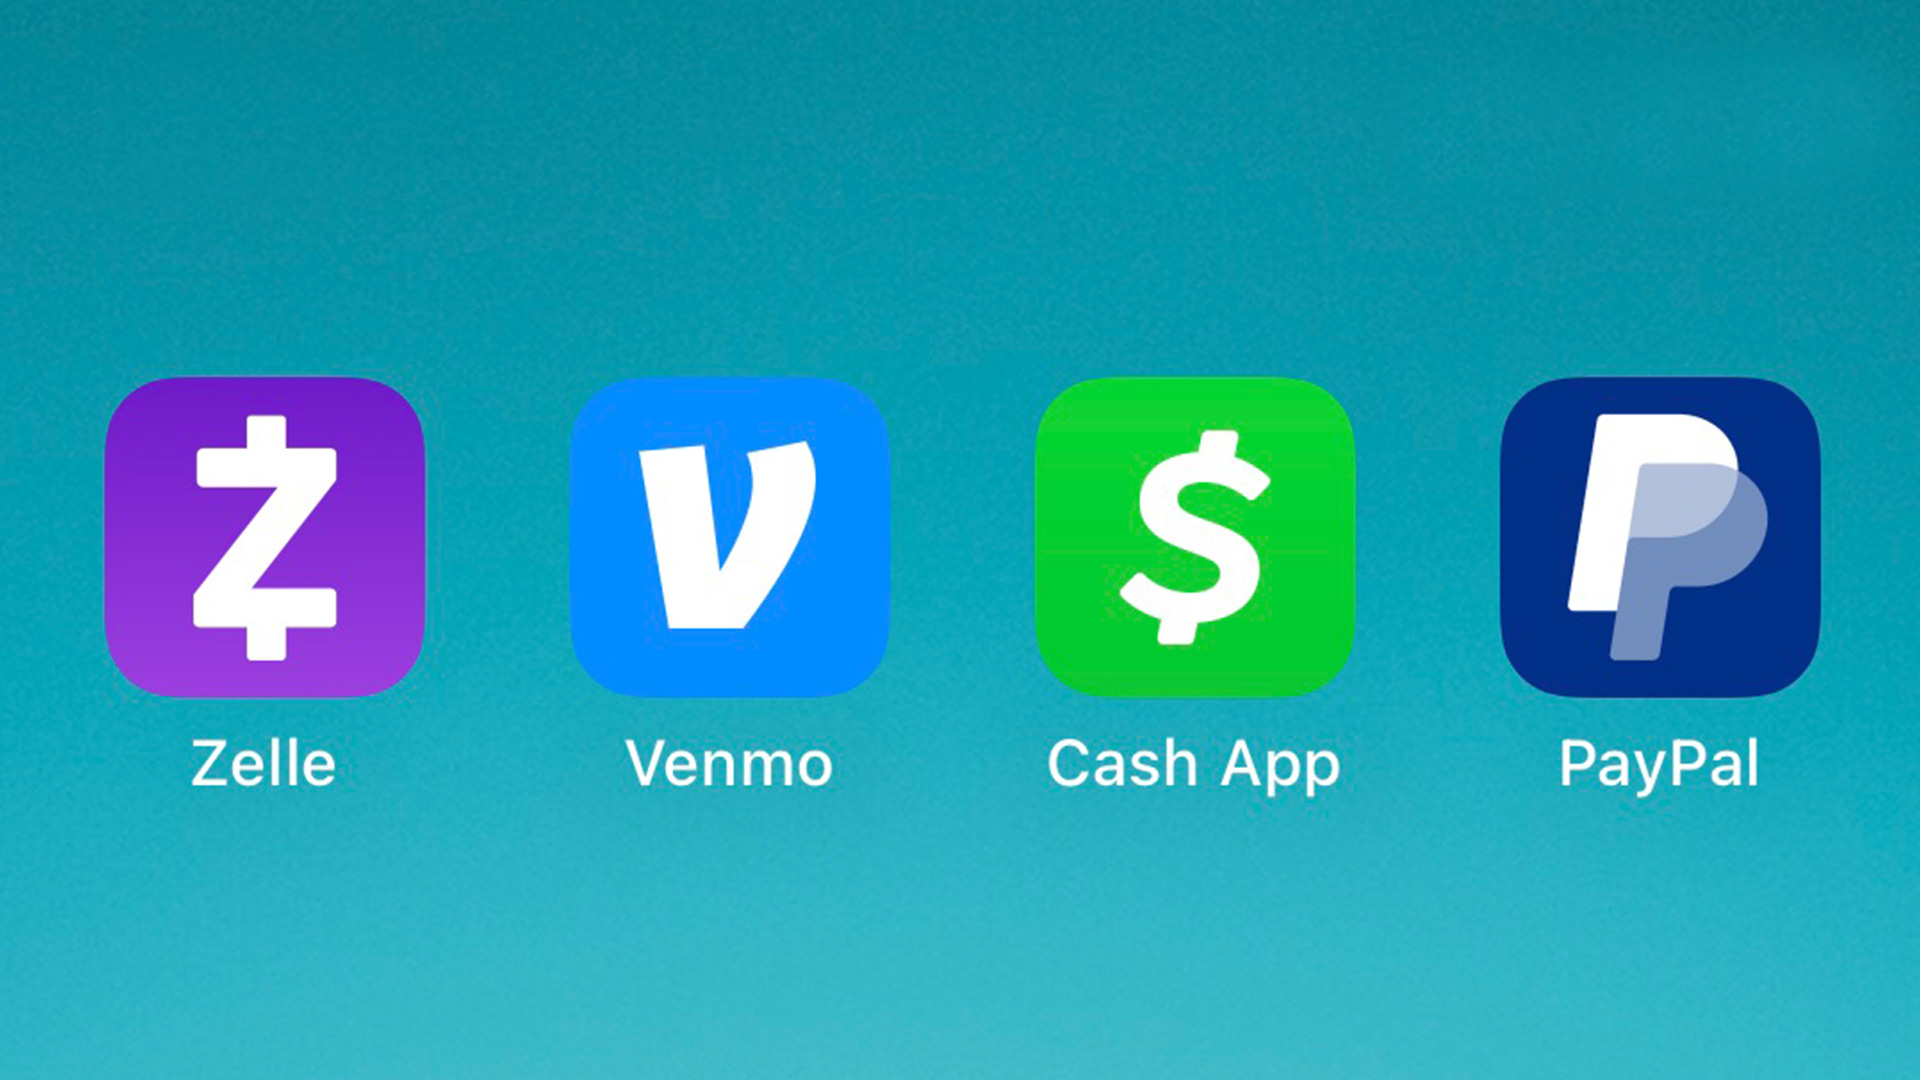 Zelle, Venmo, Cash App and PayPal apps